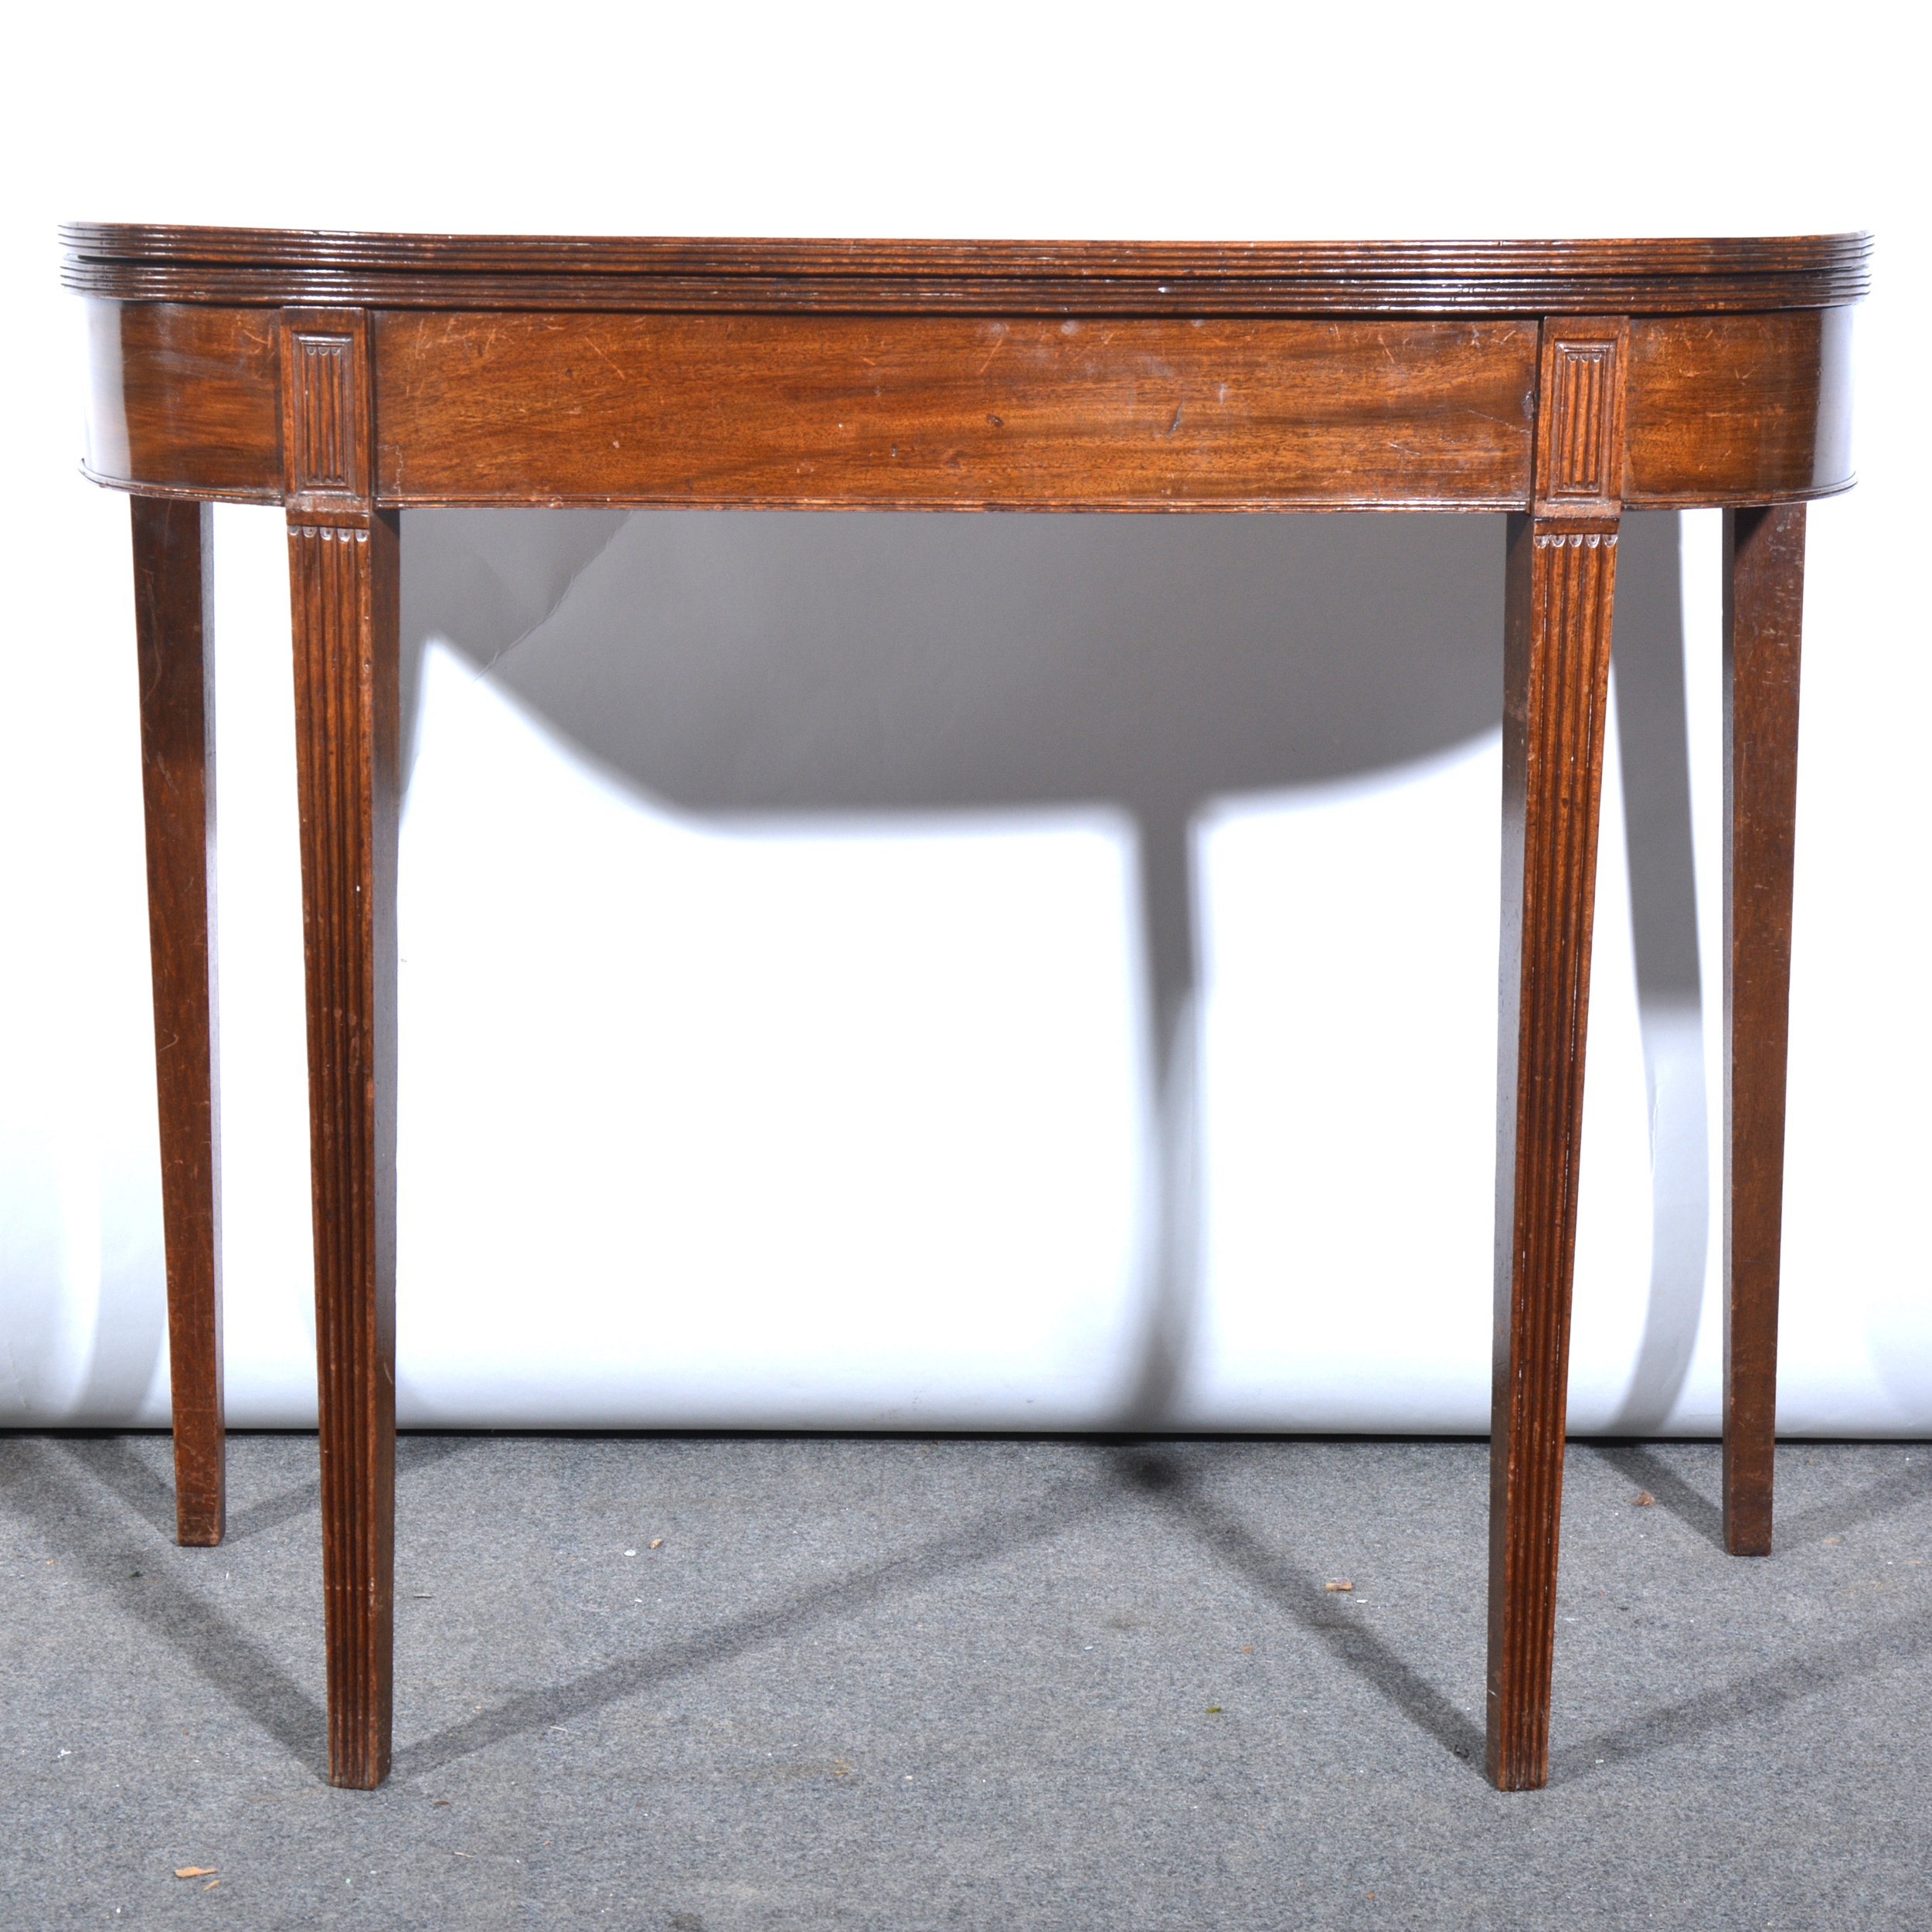 George III mahogany card table, D-shape foldover top, baize lined interior,